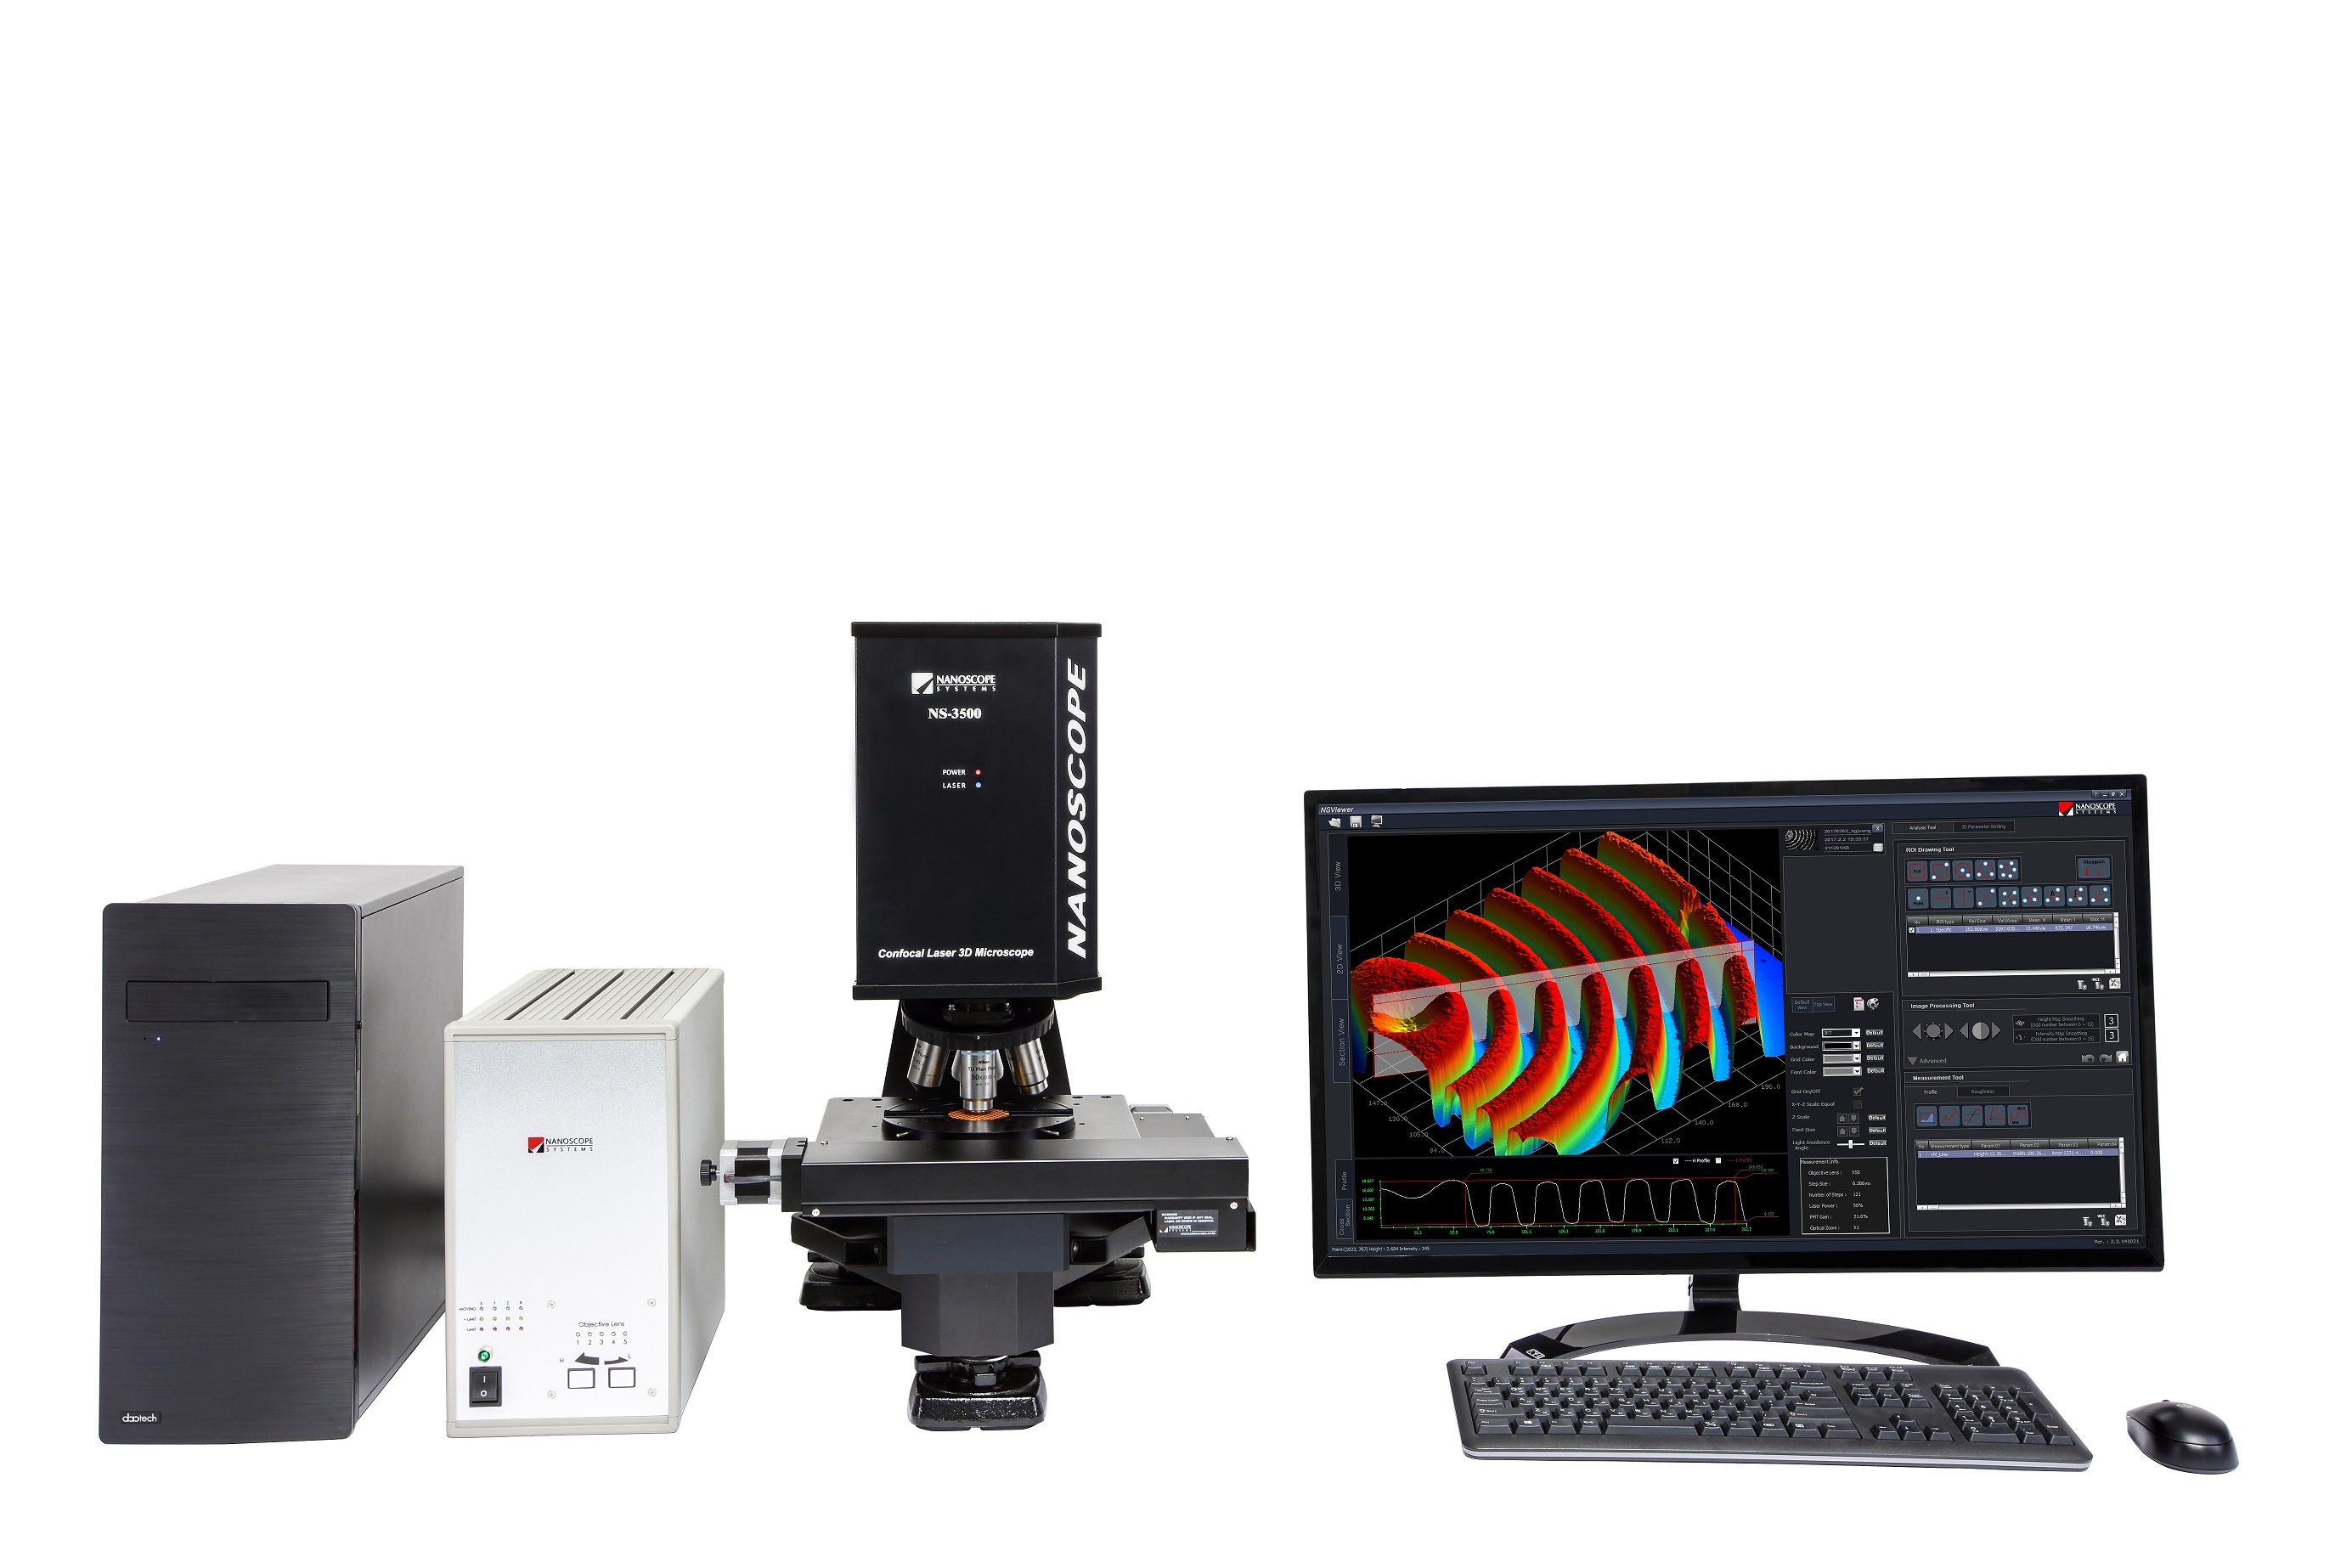 Nanoscope system NS3500三维激光共聚焦显微镜